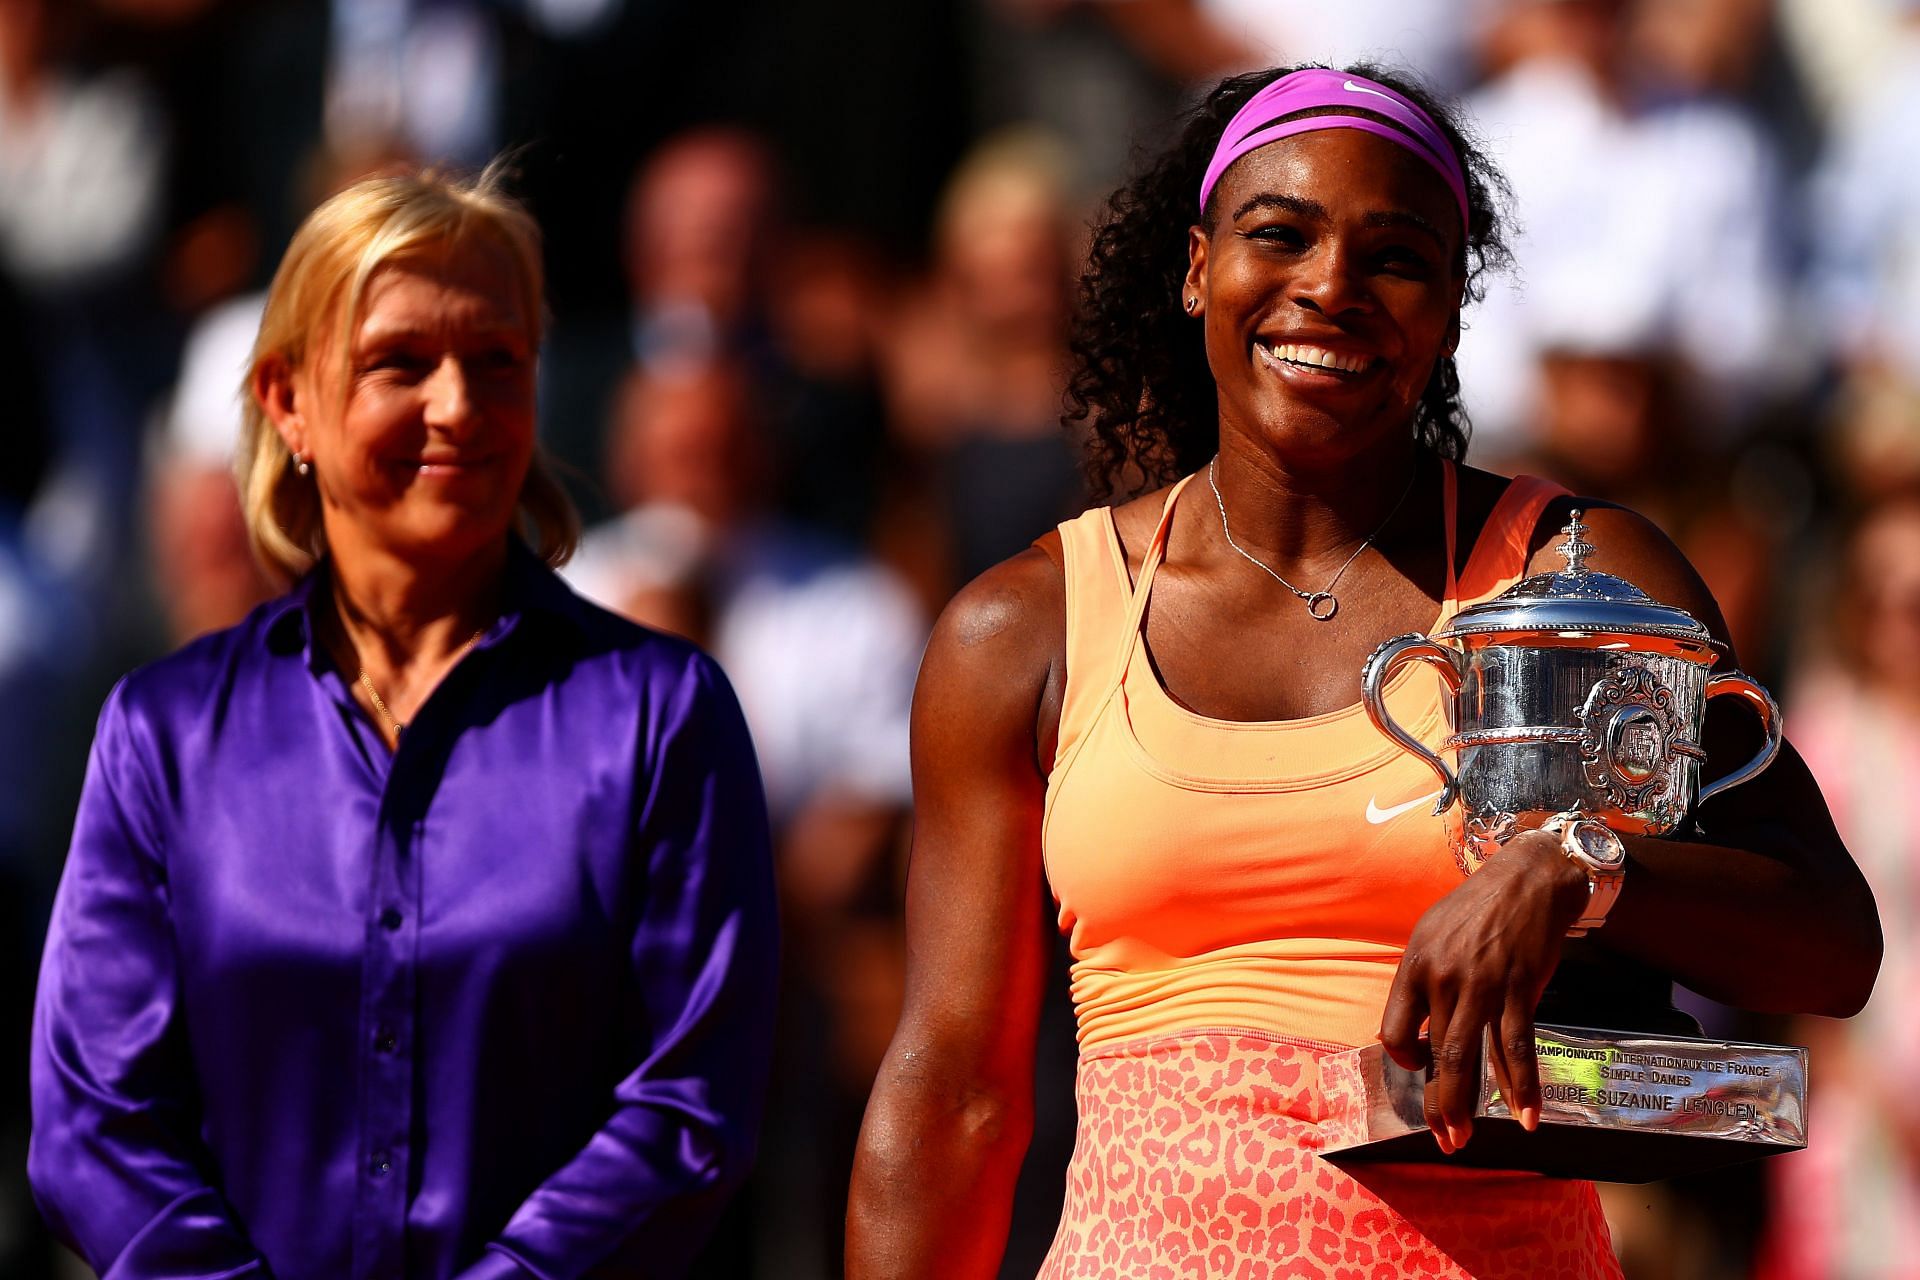 Serena Williams and Martina Navratilova during the 2015 French Open